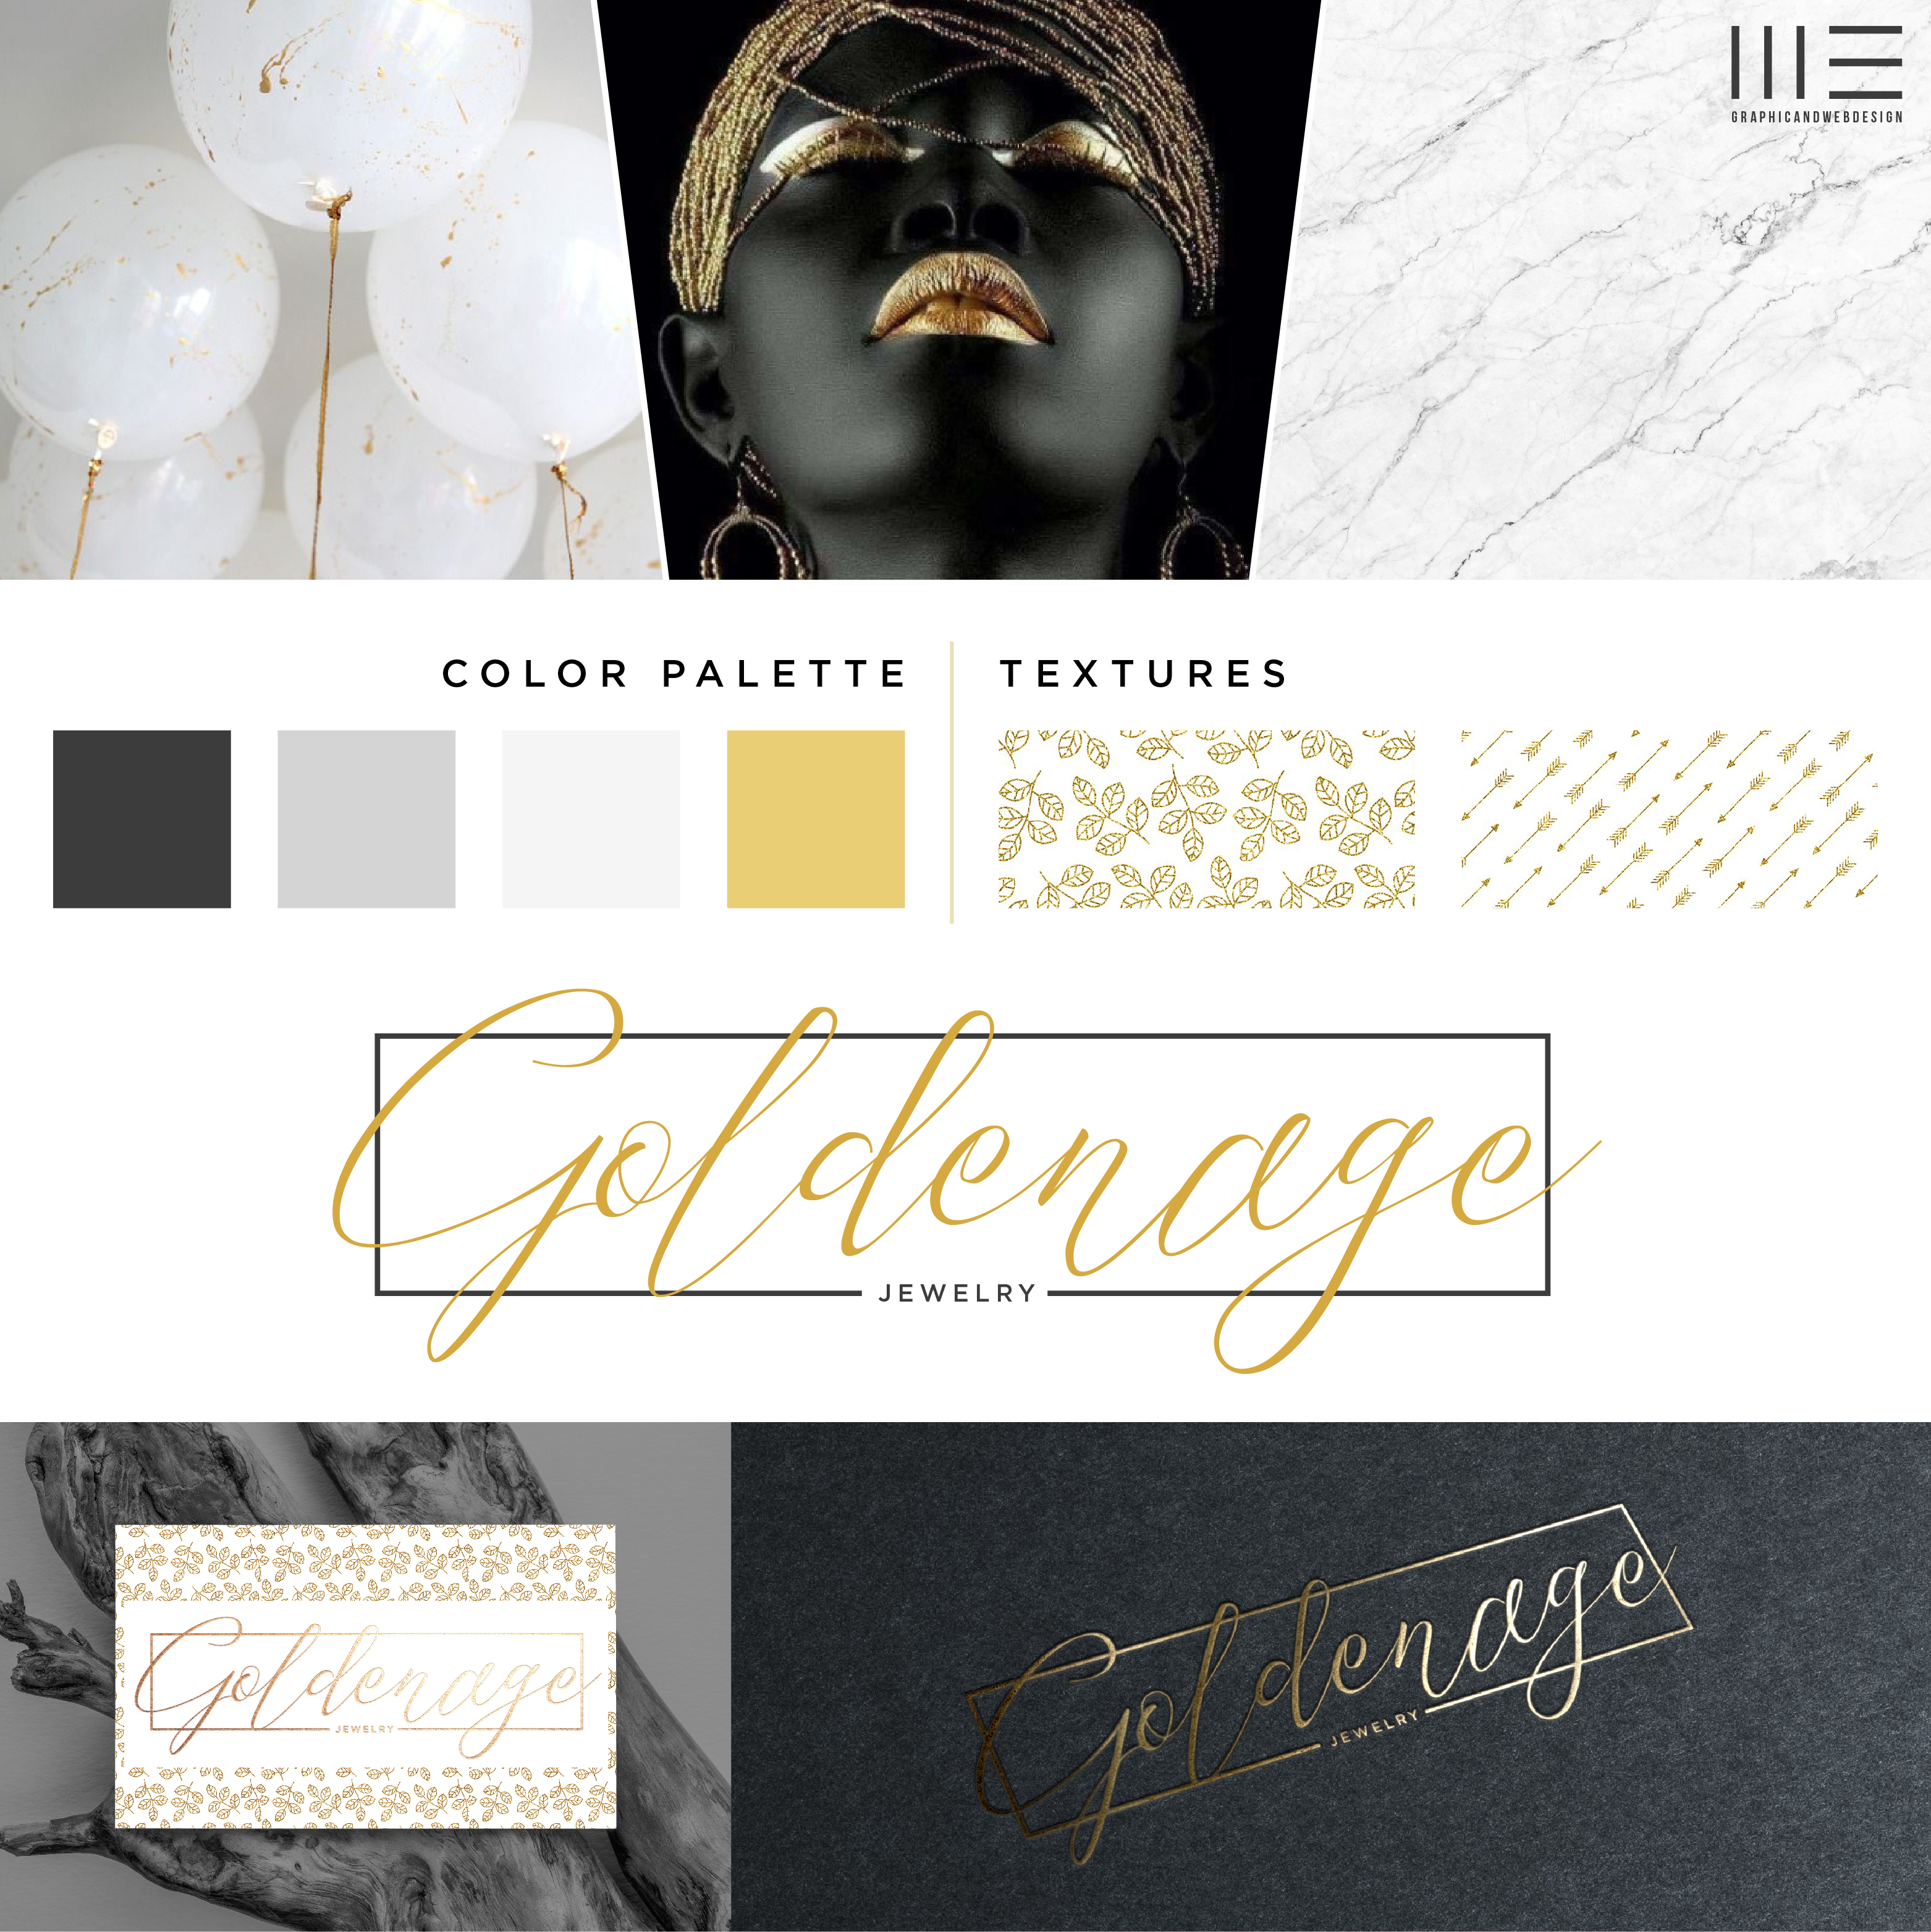 Goldenage - logo e brand identity